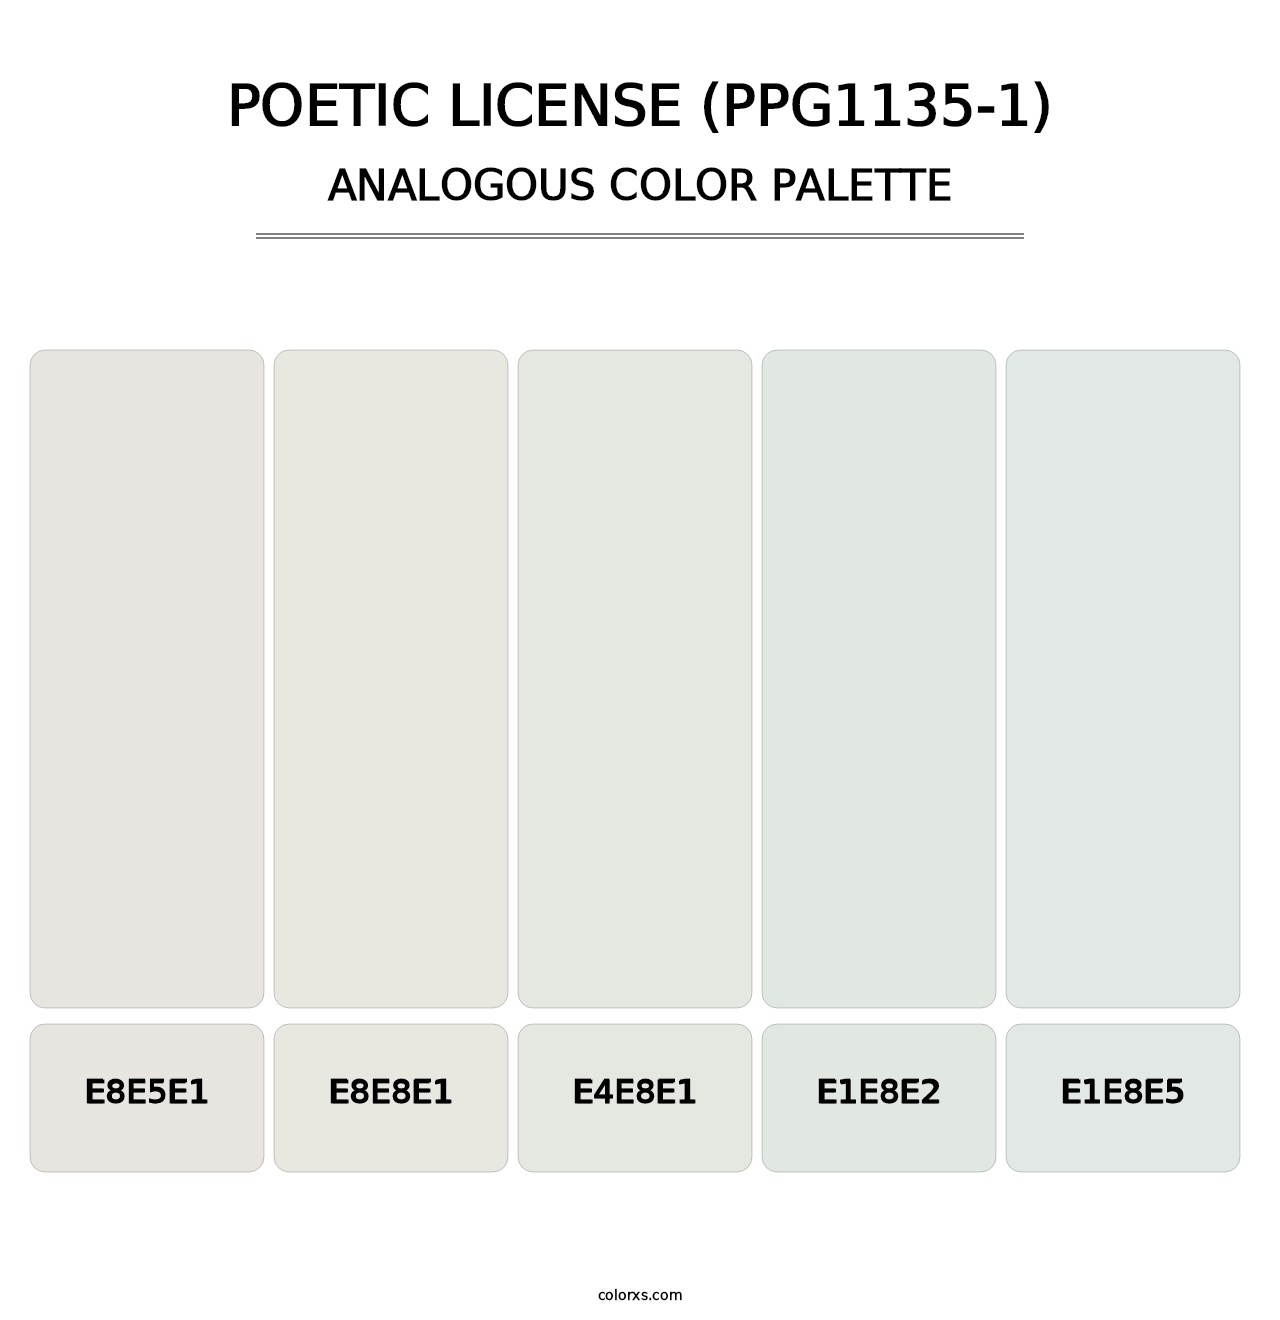 Poetic License (PPG1135-1) - Analogous Color Palette